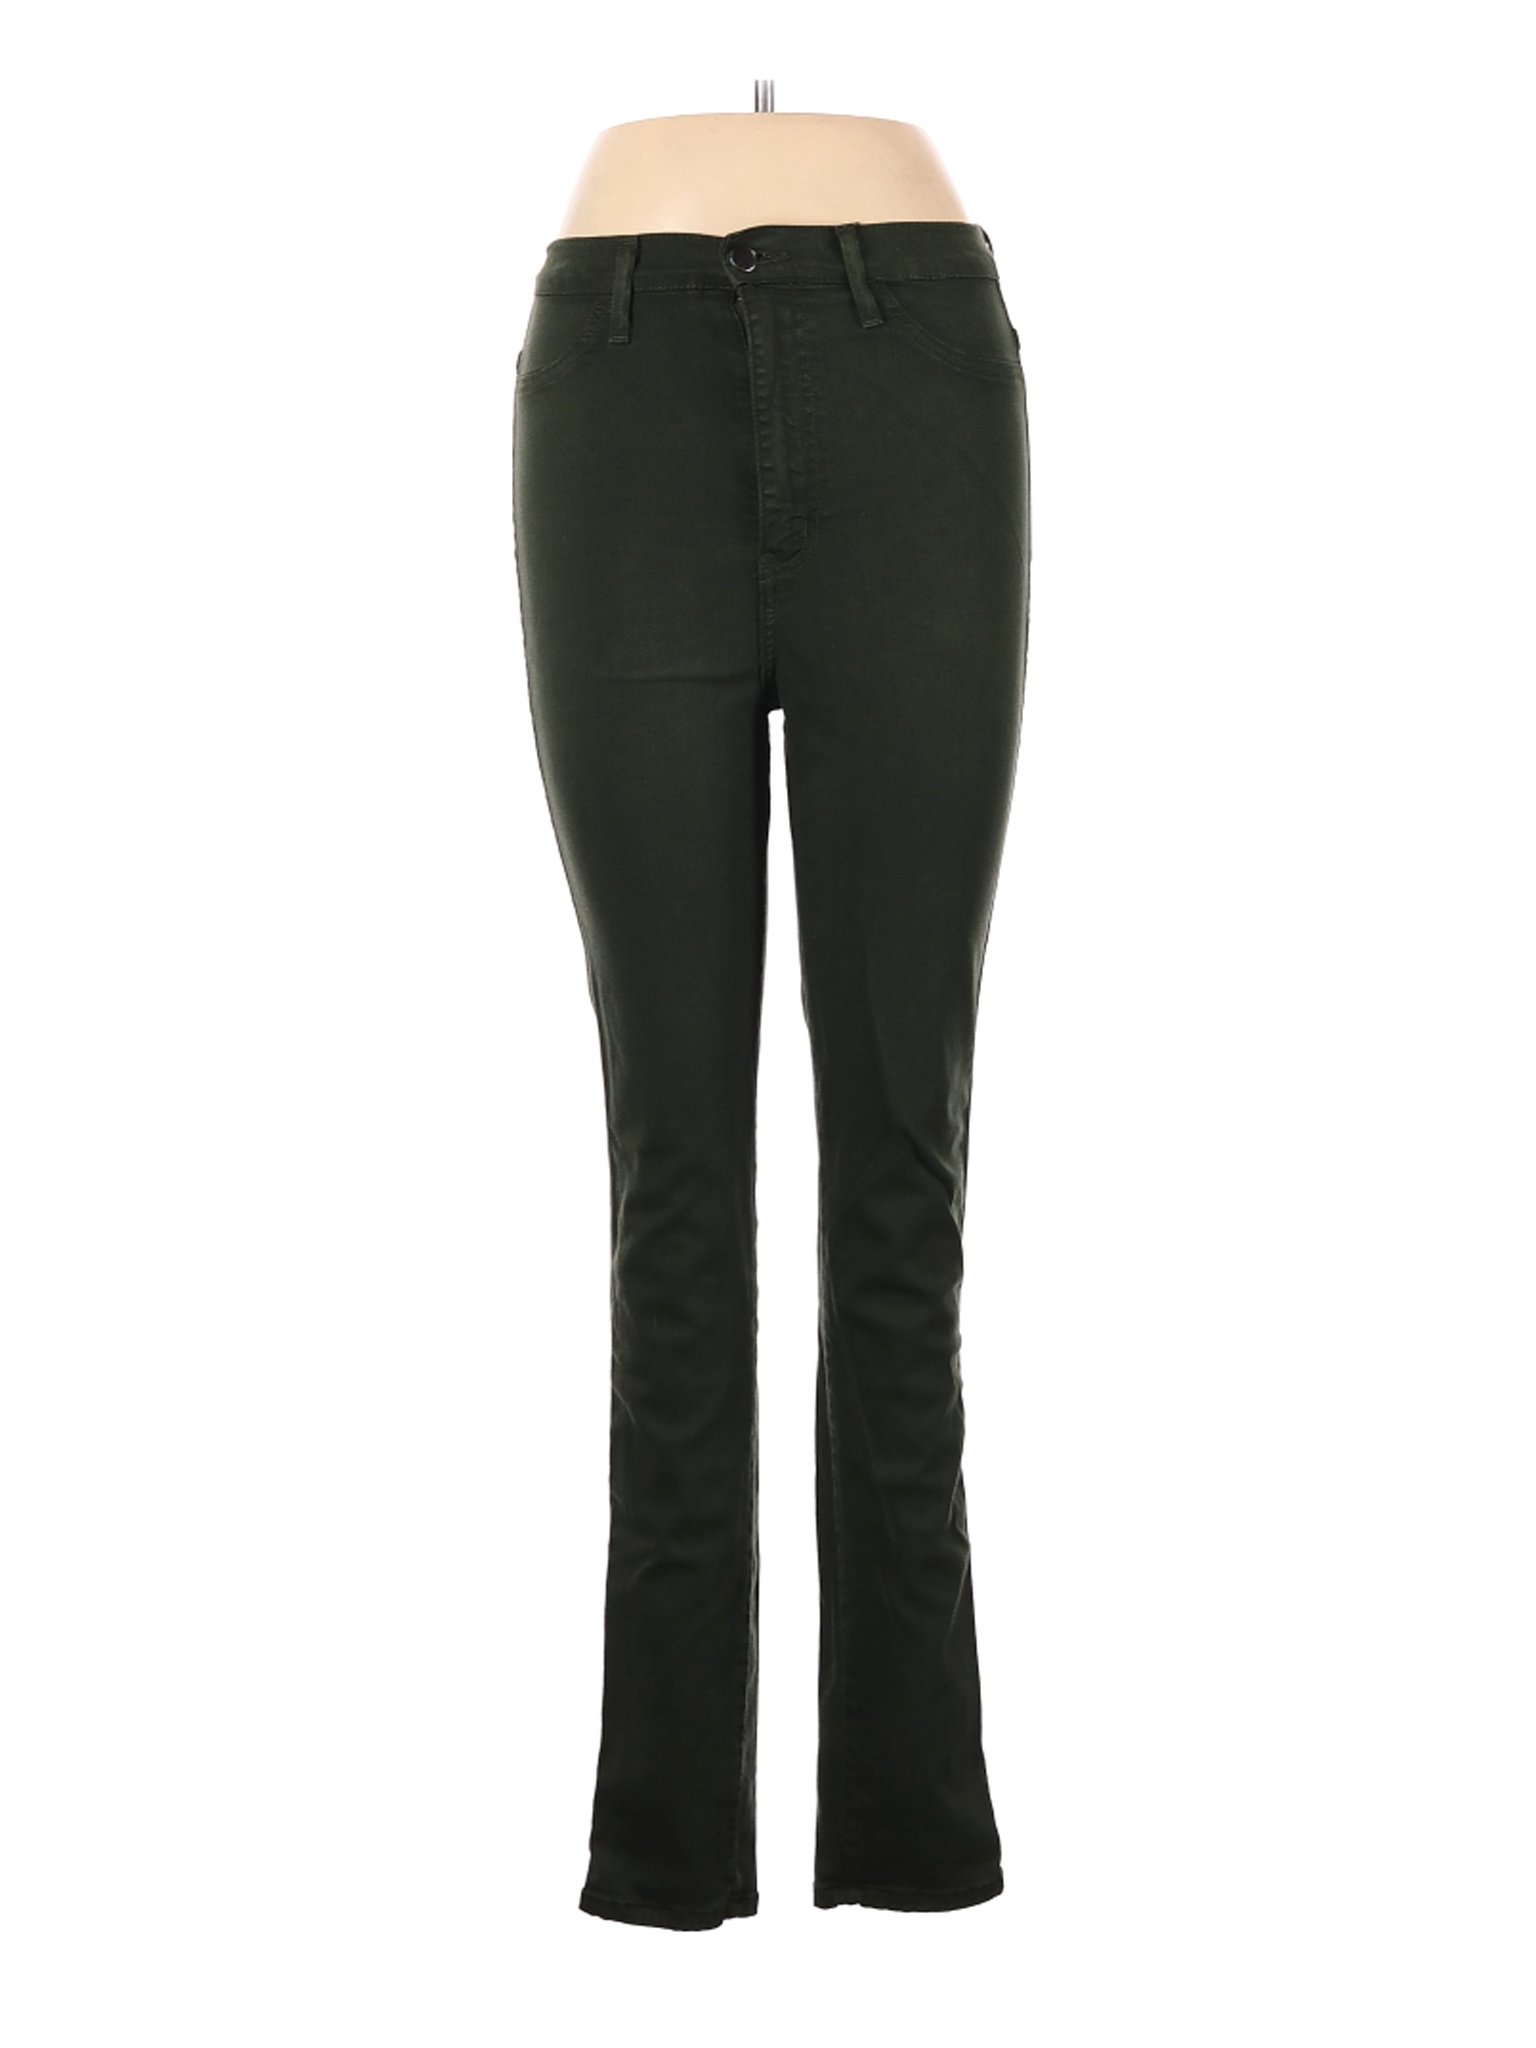 Fashion Nova Women Green Jeans 9 | eBay